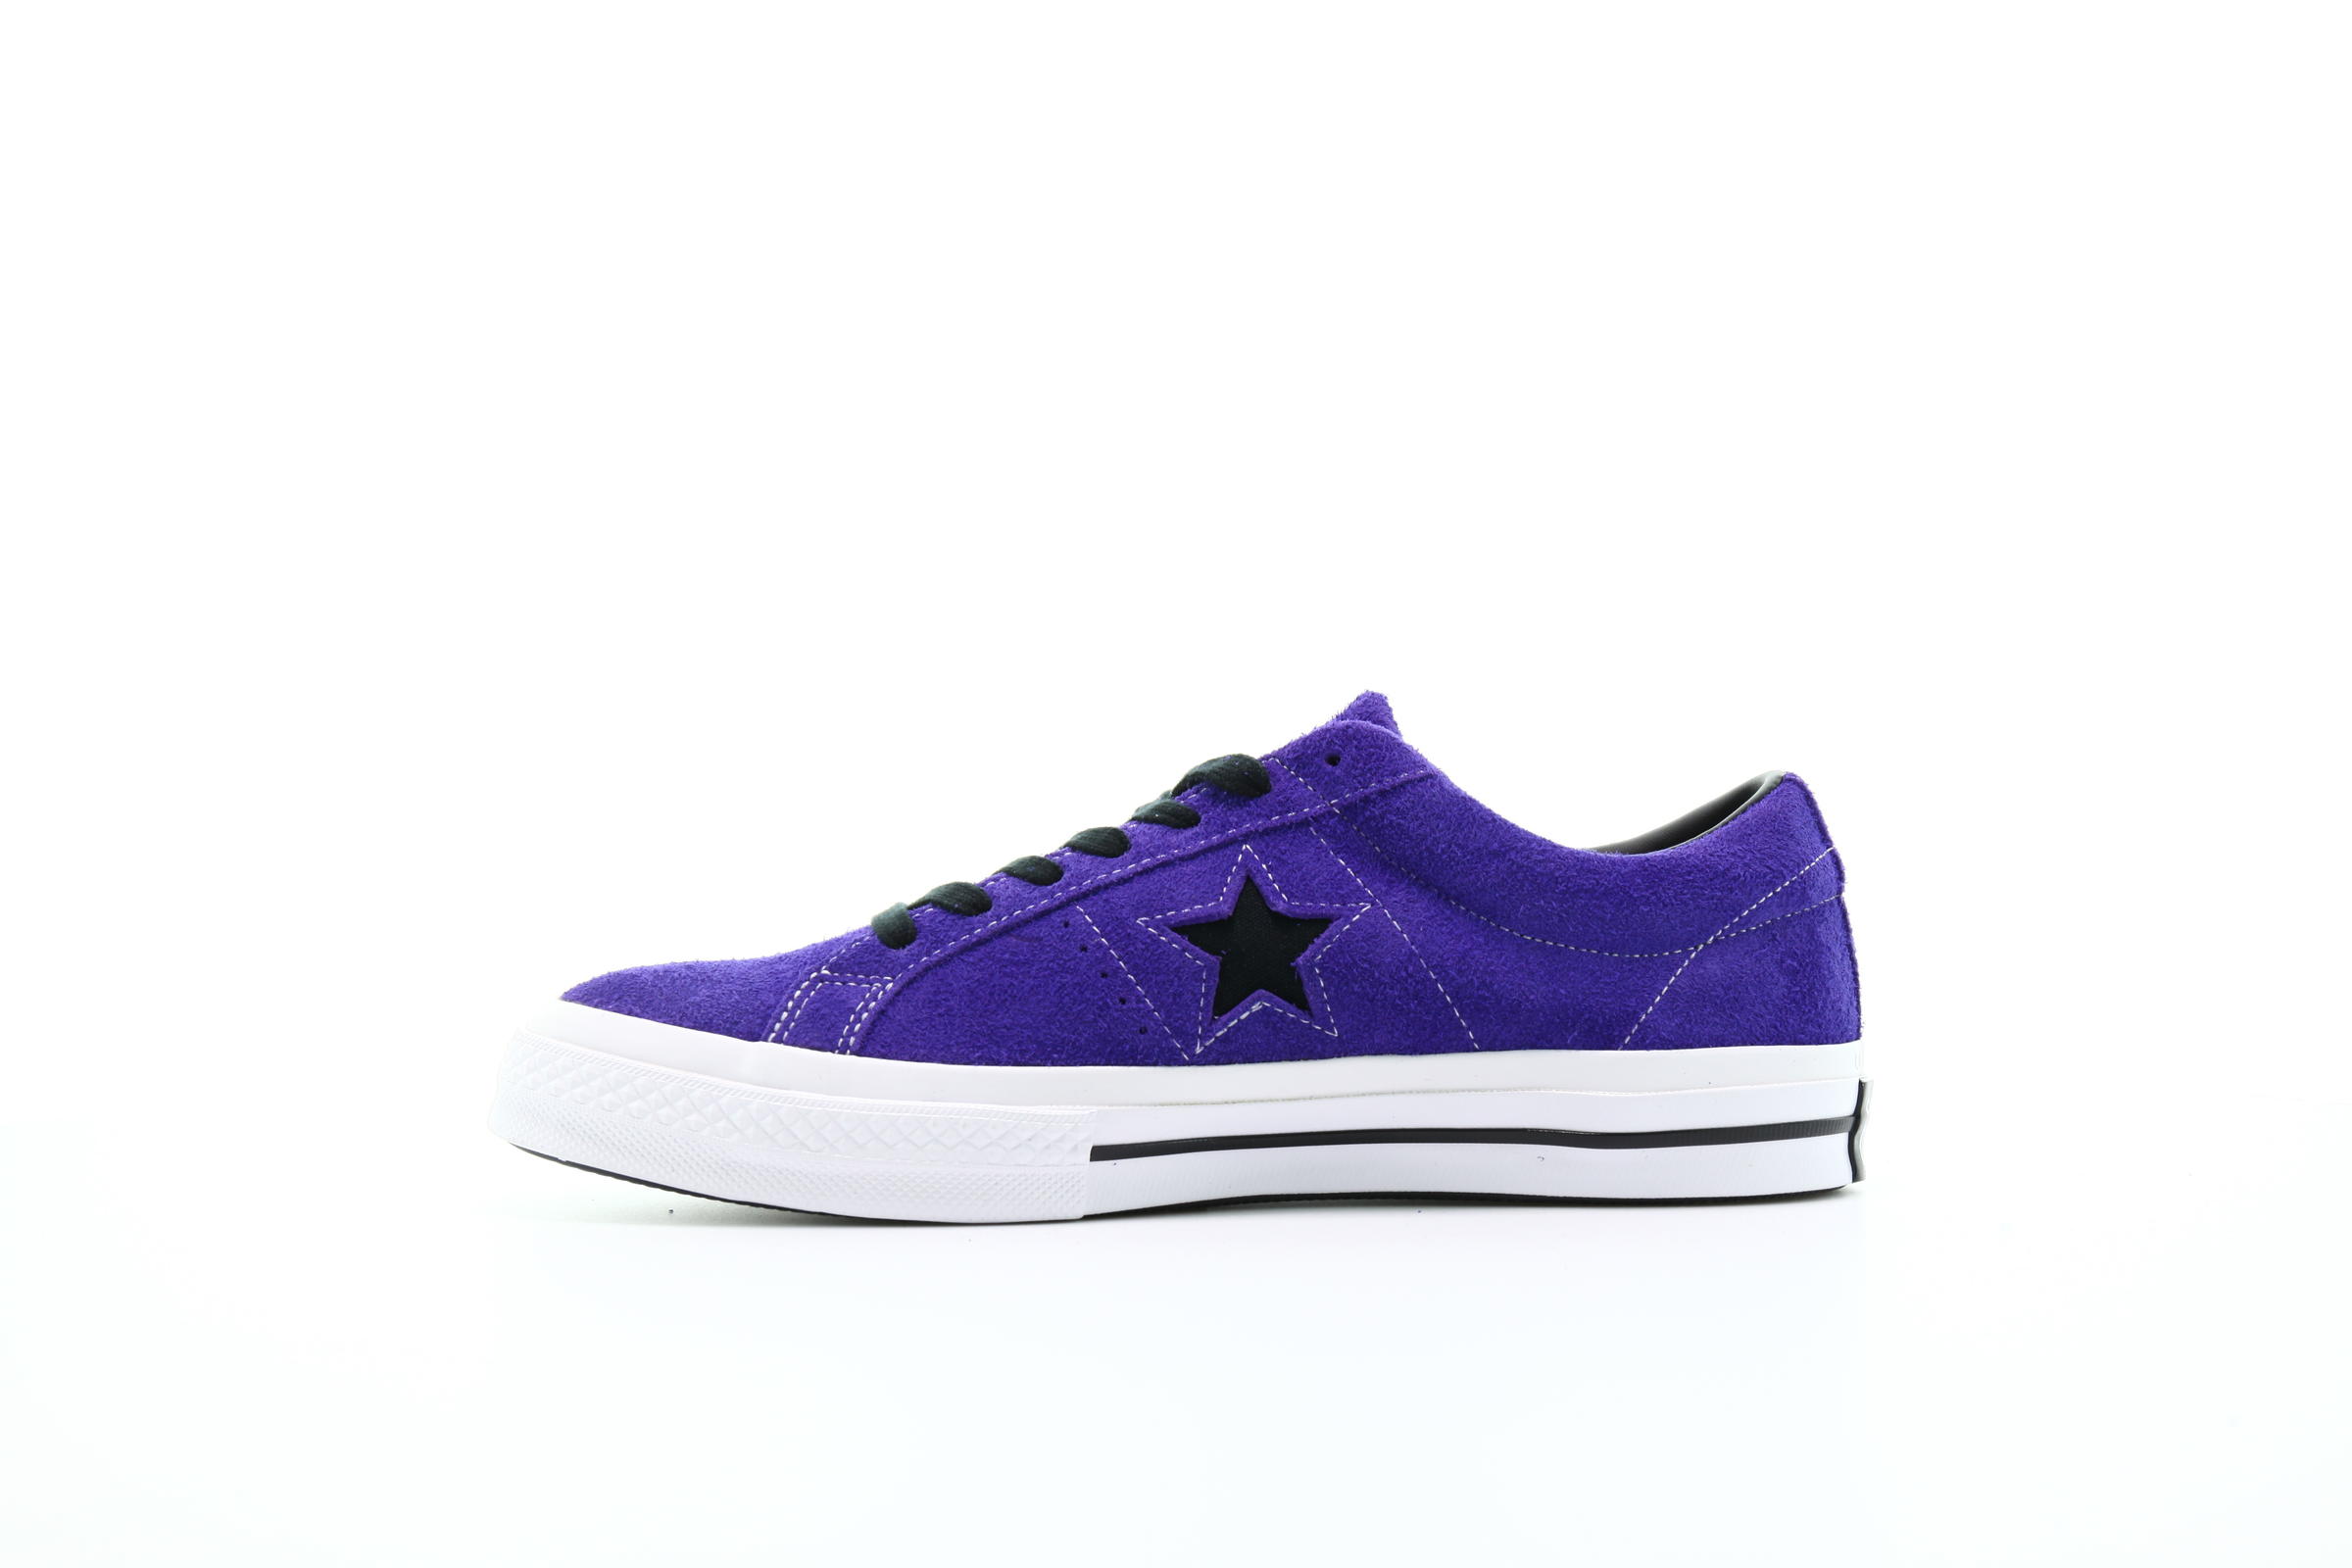 Converse One Star OX "Court Purple"